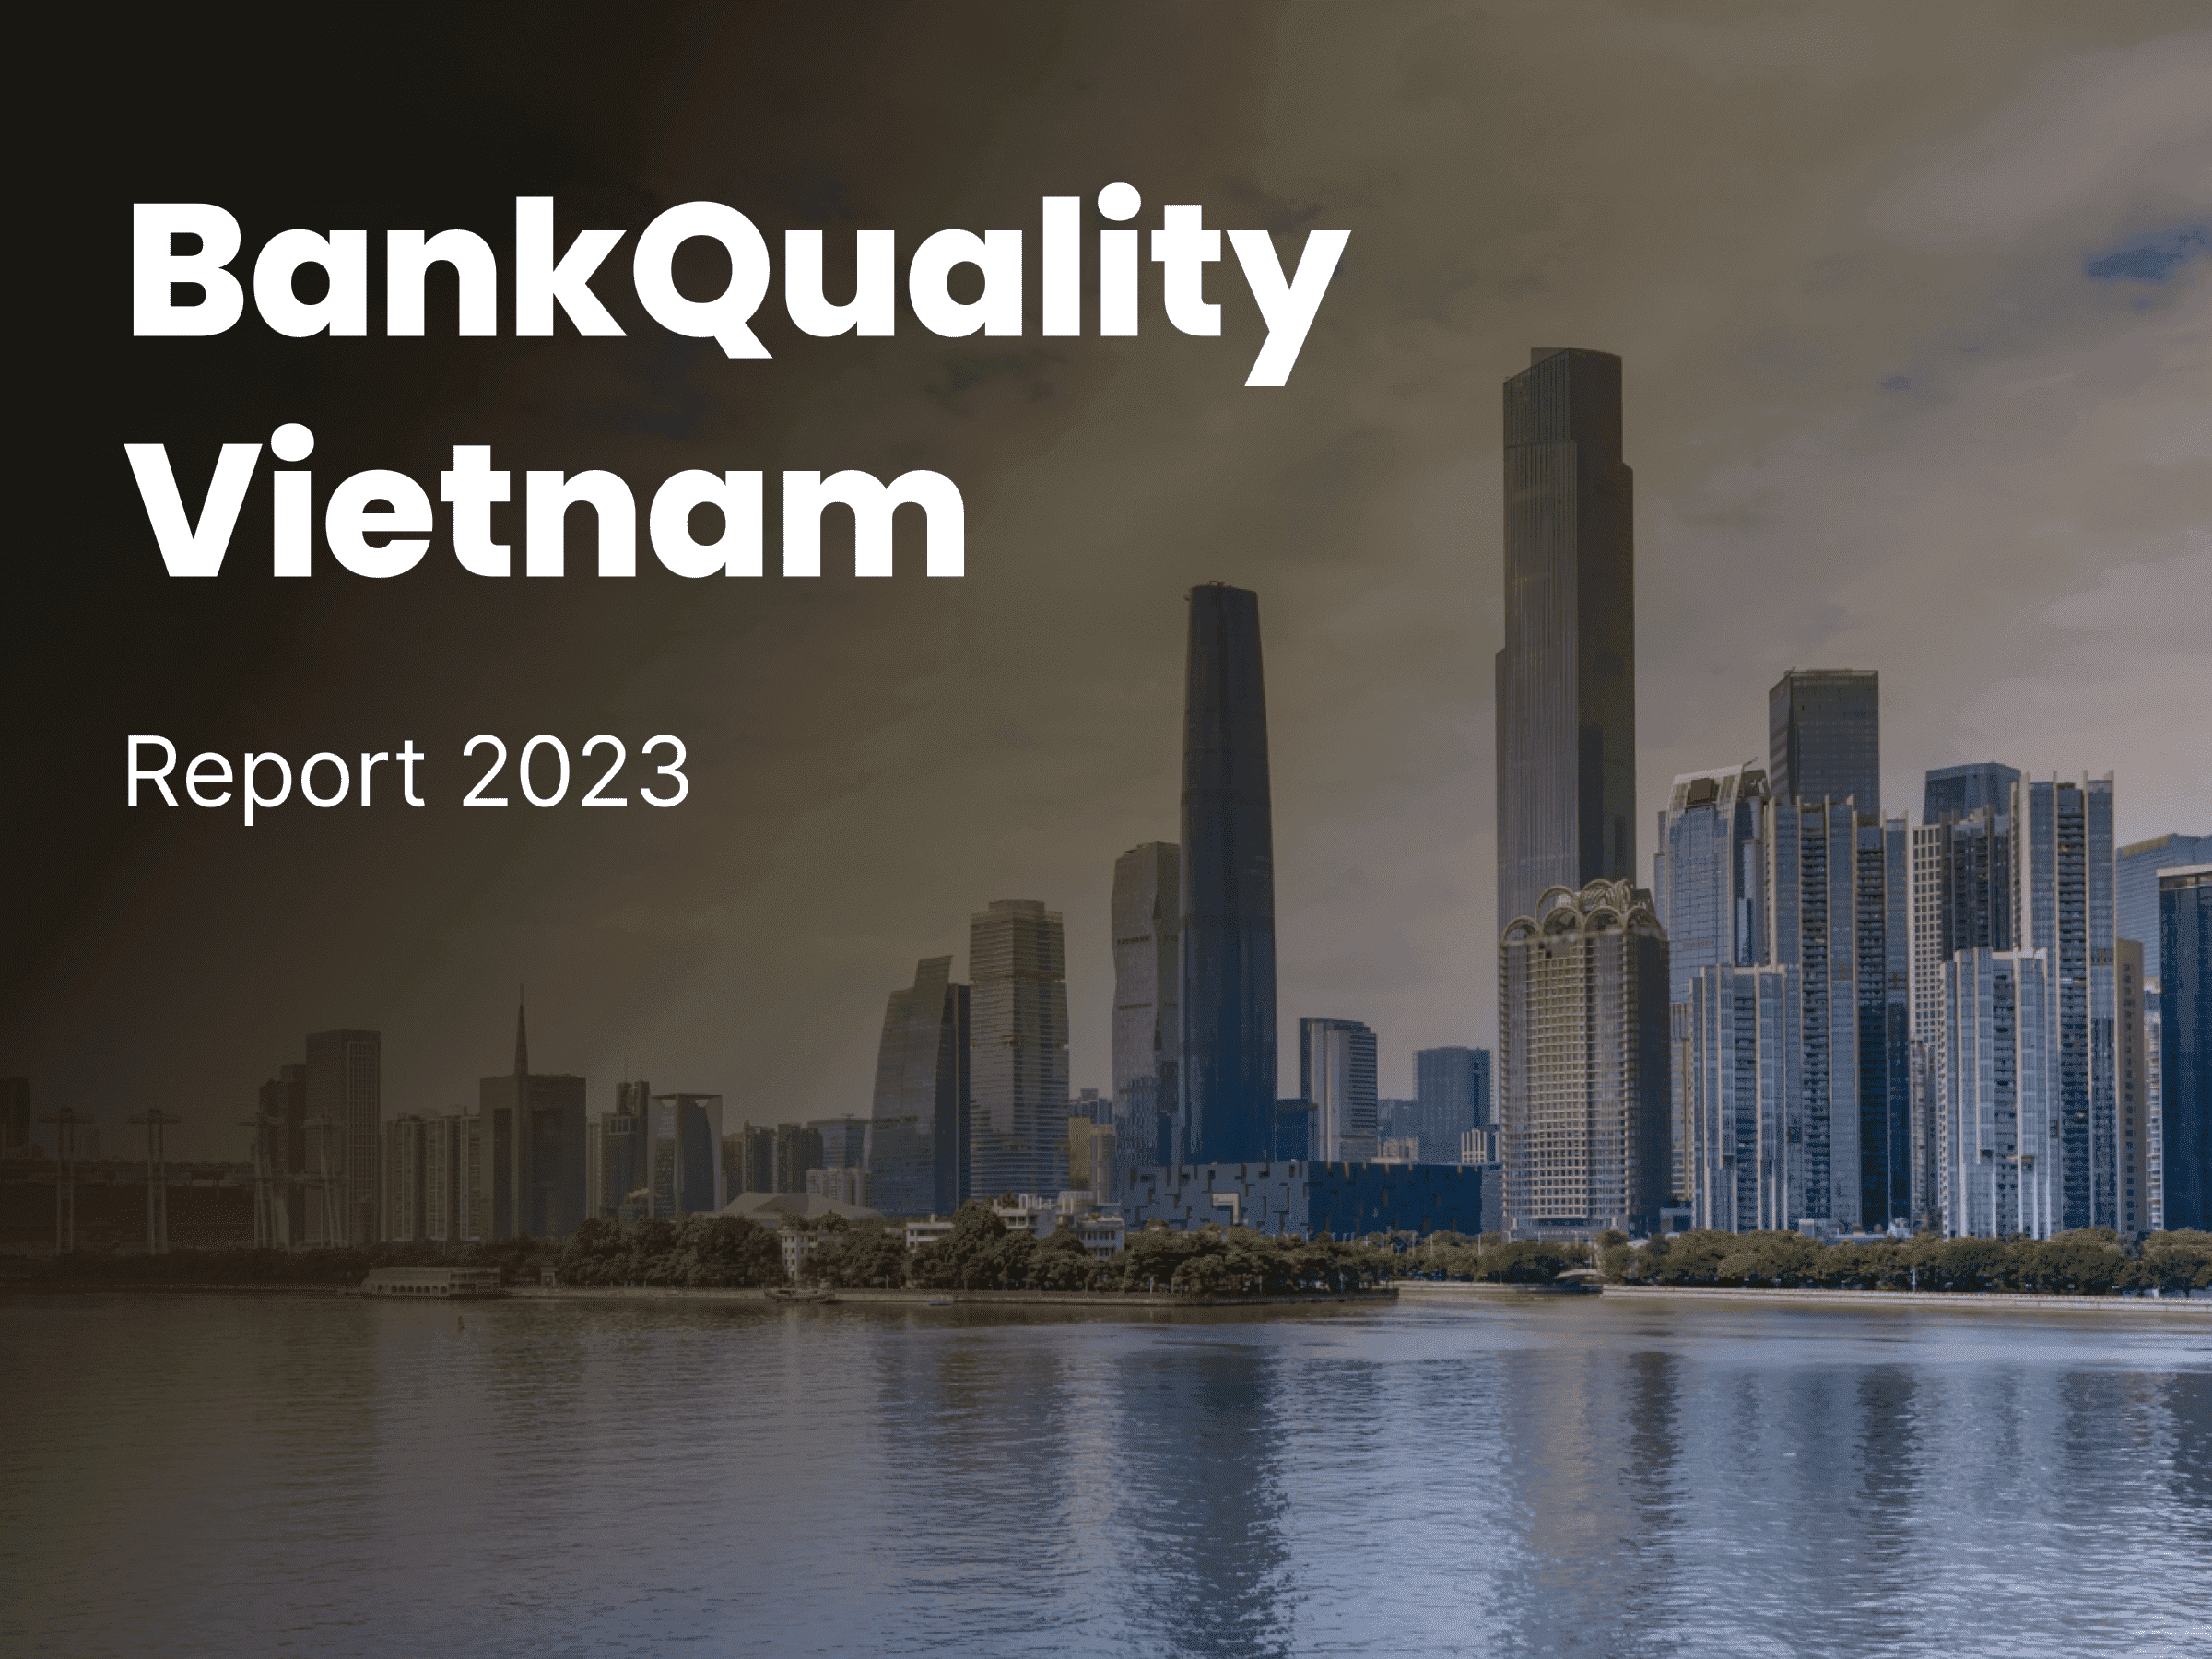 Bankquality Consumer Survey 2023 Vietnam Report